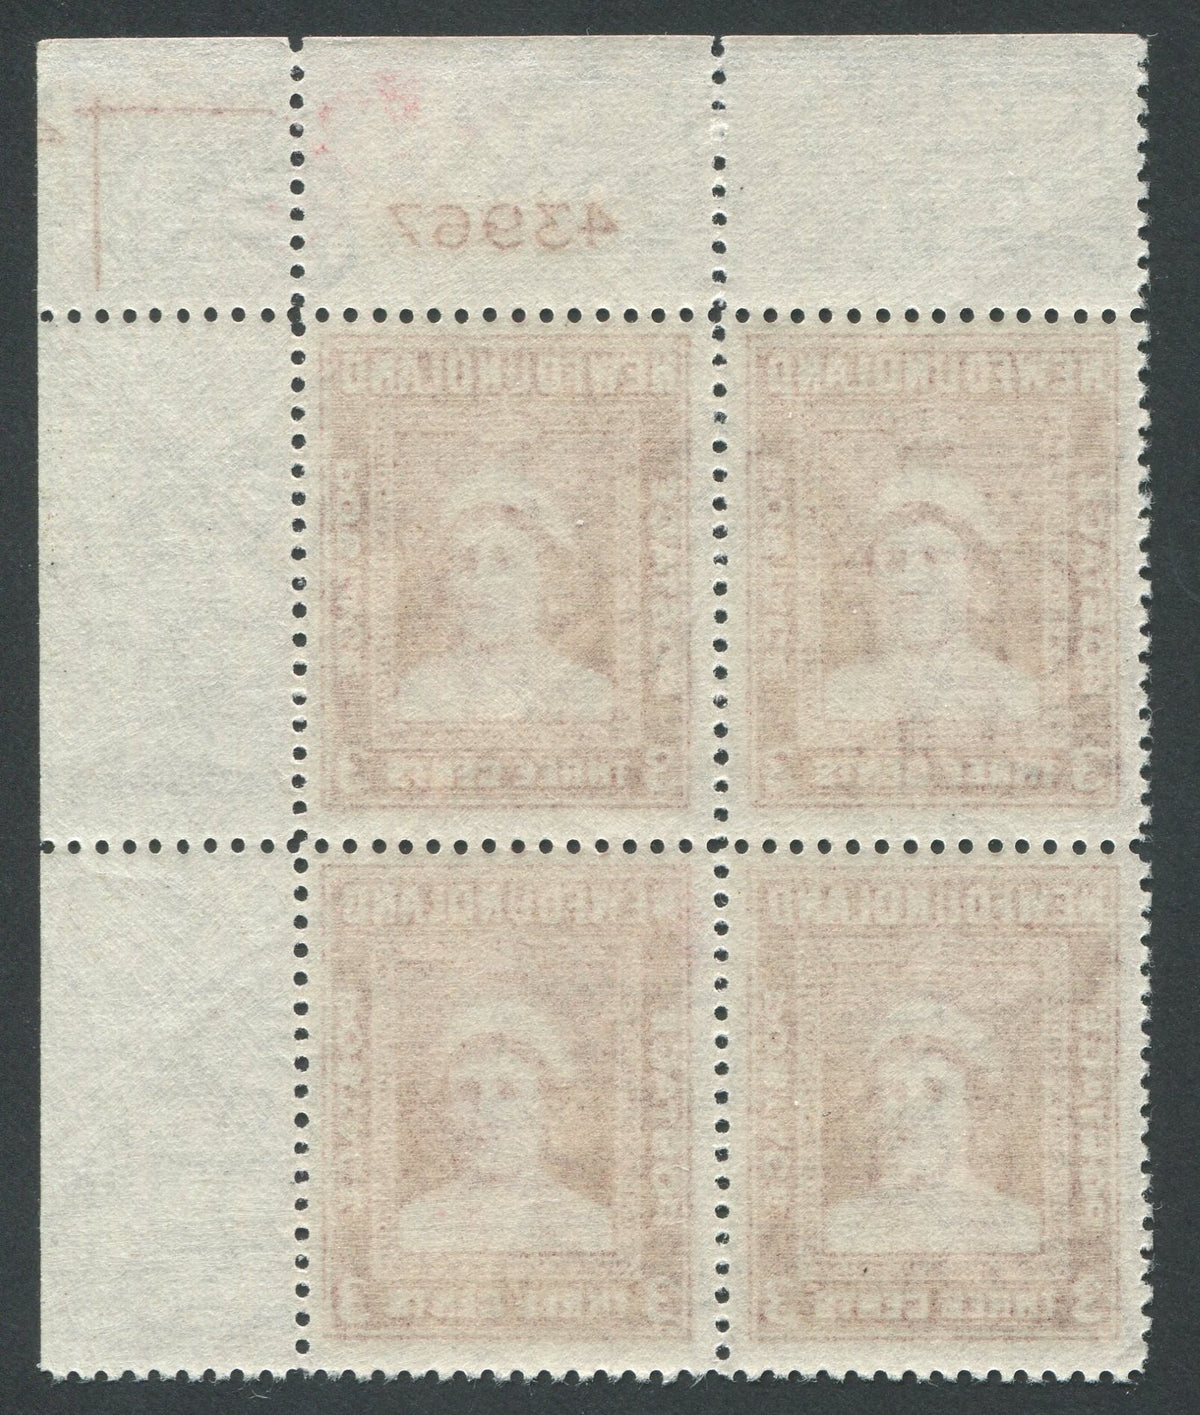 0255NF1708 - Newfoundland #255 - Mint Inscription Block of 4, Miscut